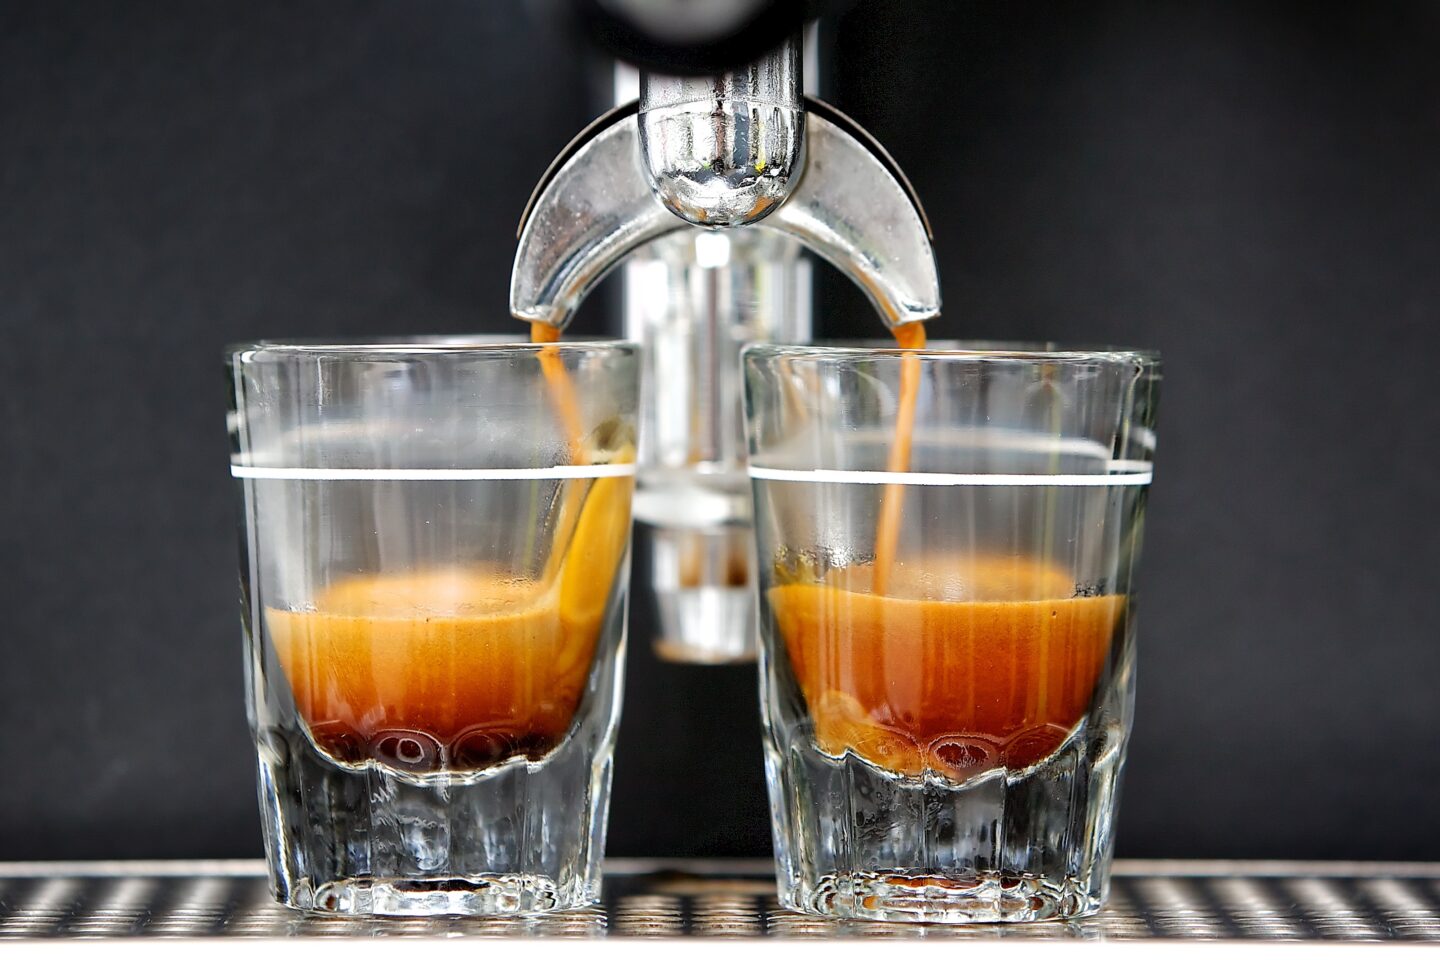 2-espresso-shots-getting-brewed-into-shot-glasses